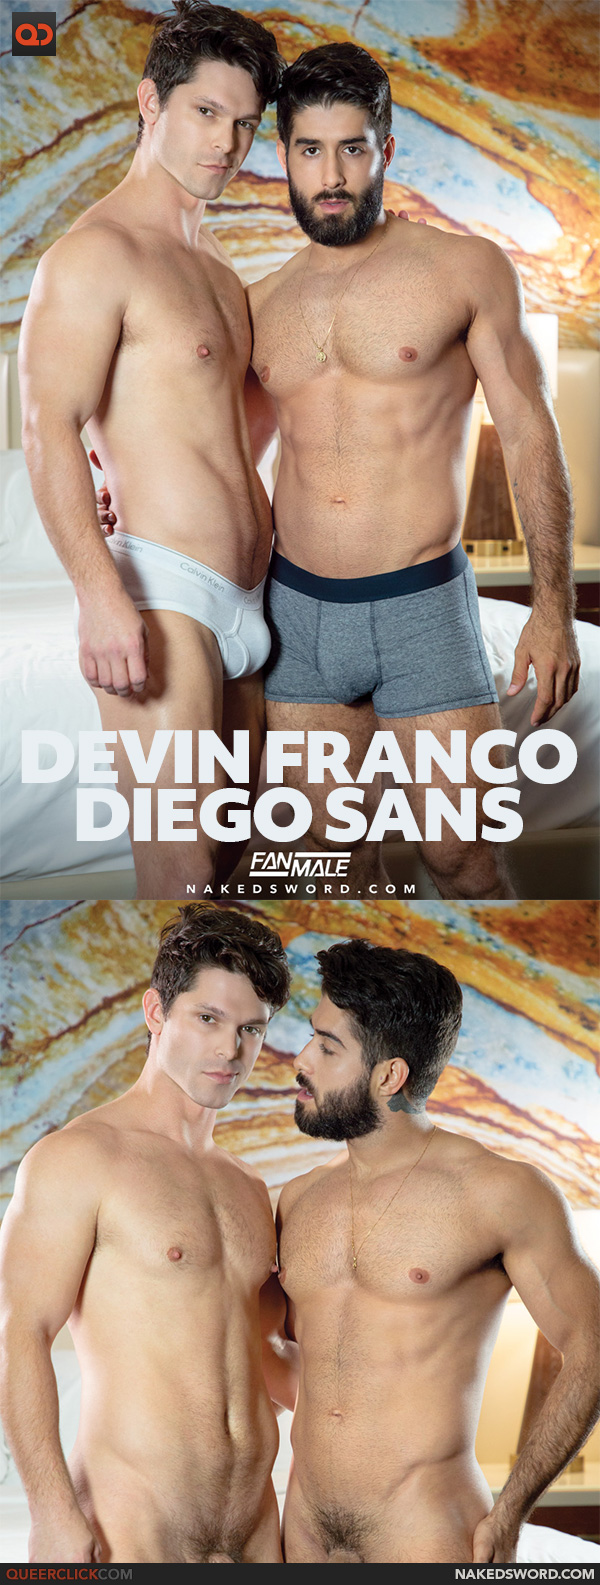 Naked Sword Devin Franco and Diego Sans